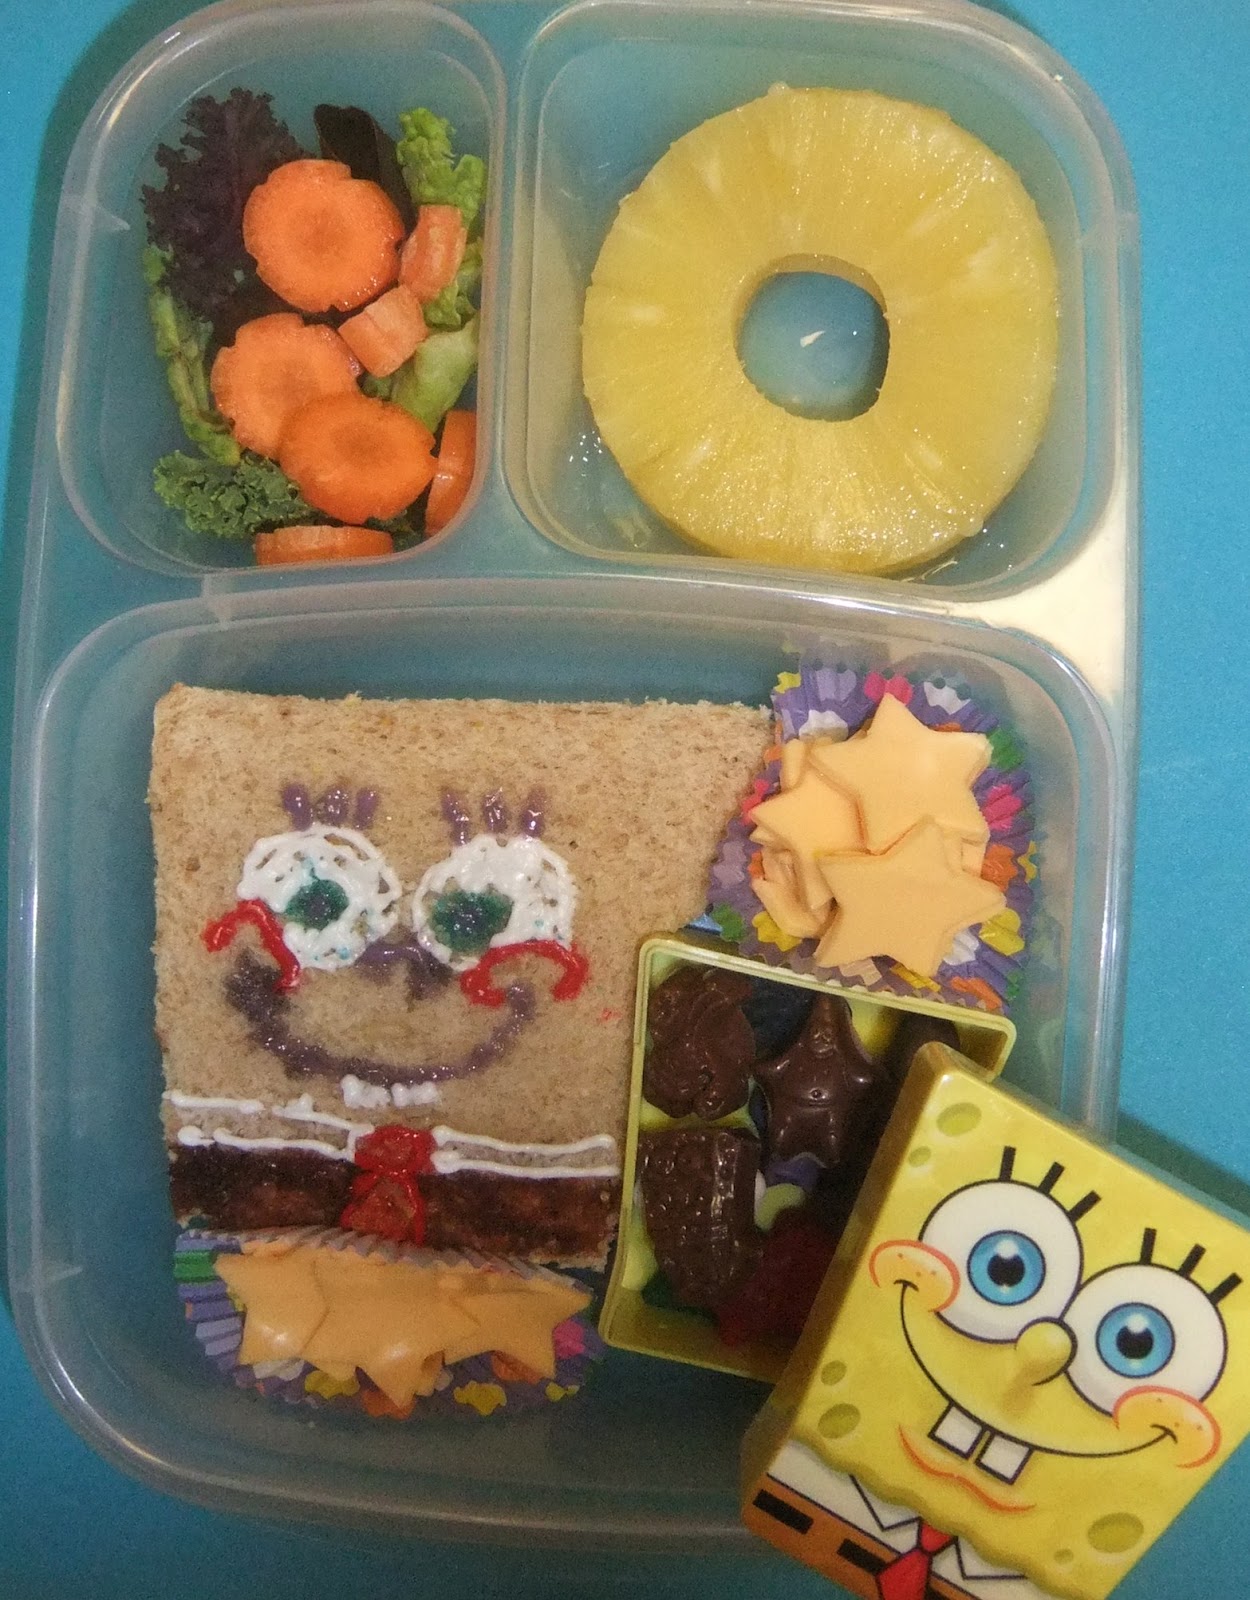 Fun SpongeBob SquarePants Lunch Box